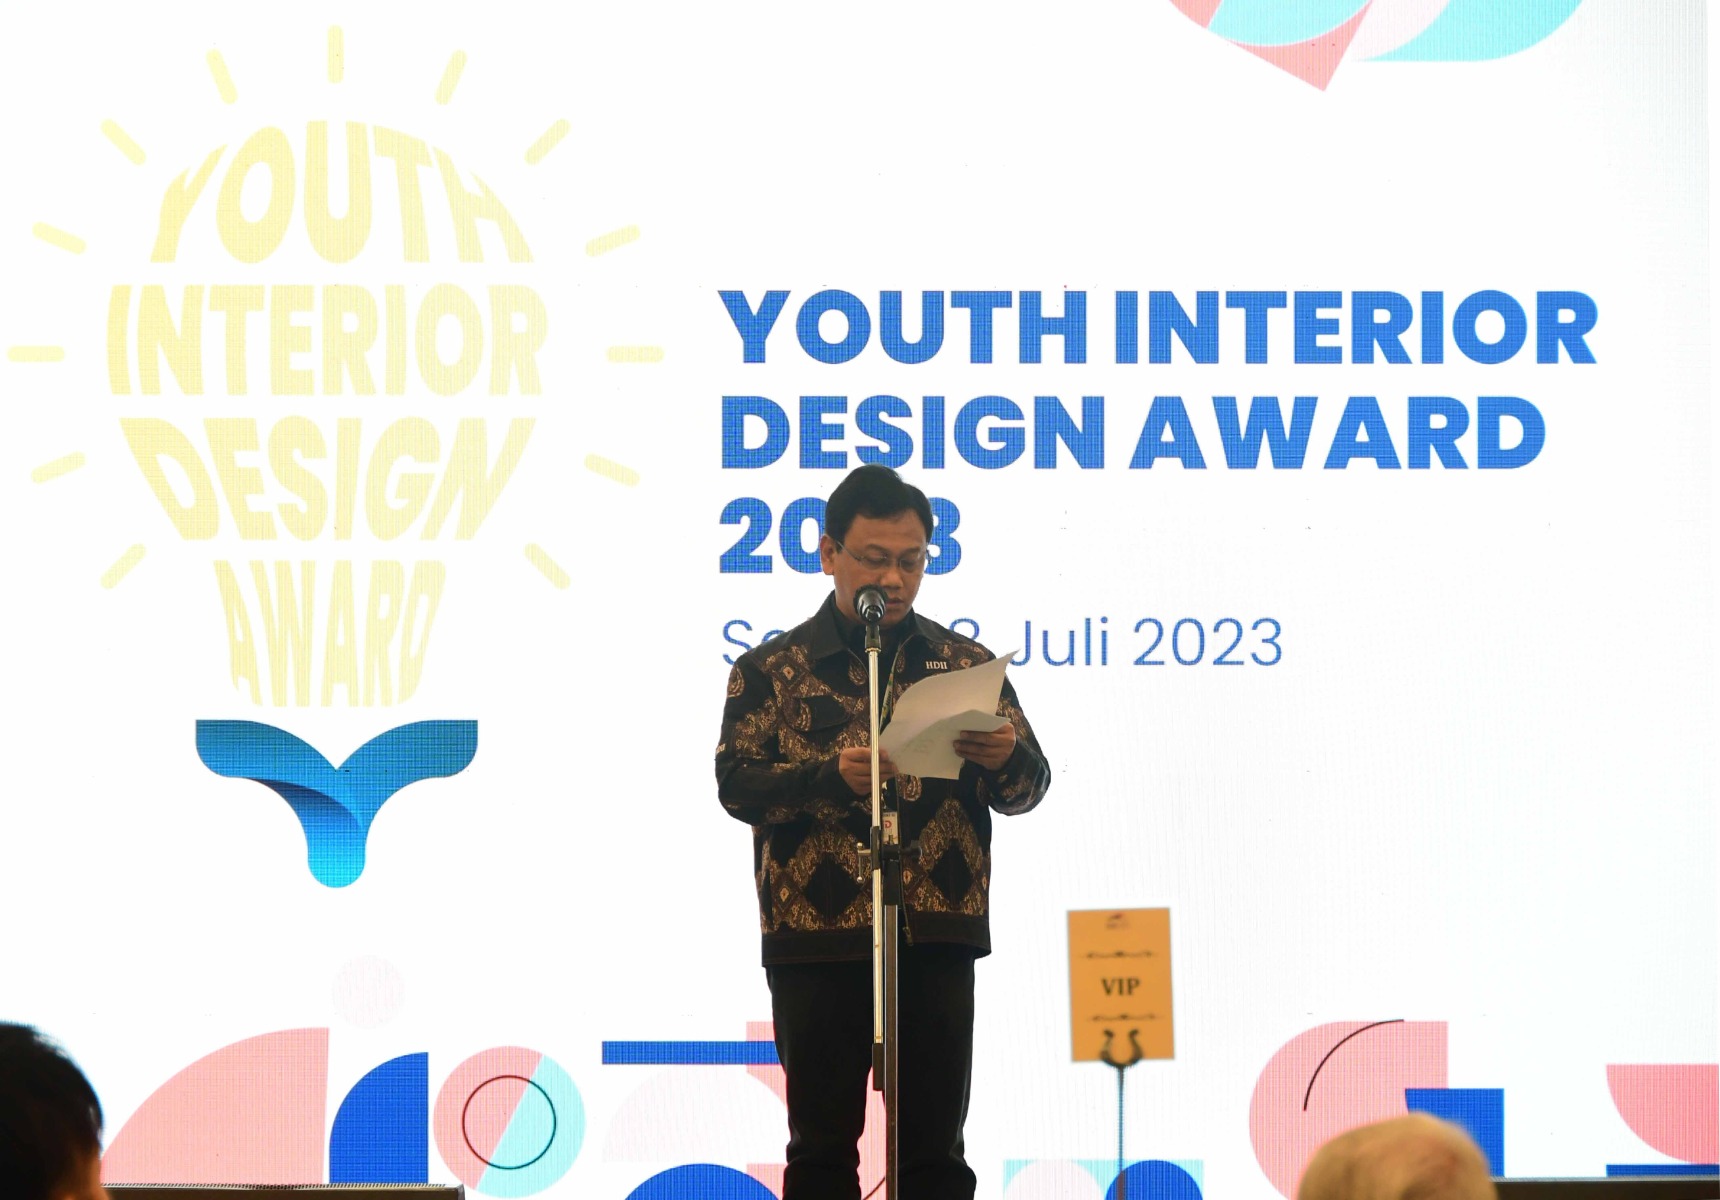 Youth Interior Design Award 2023